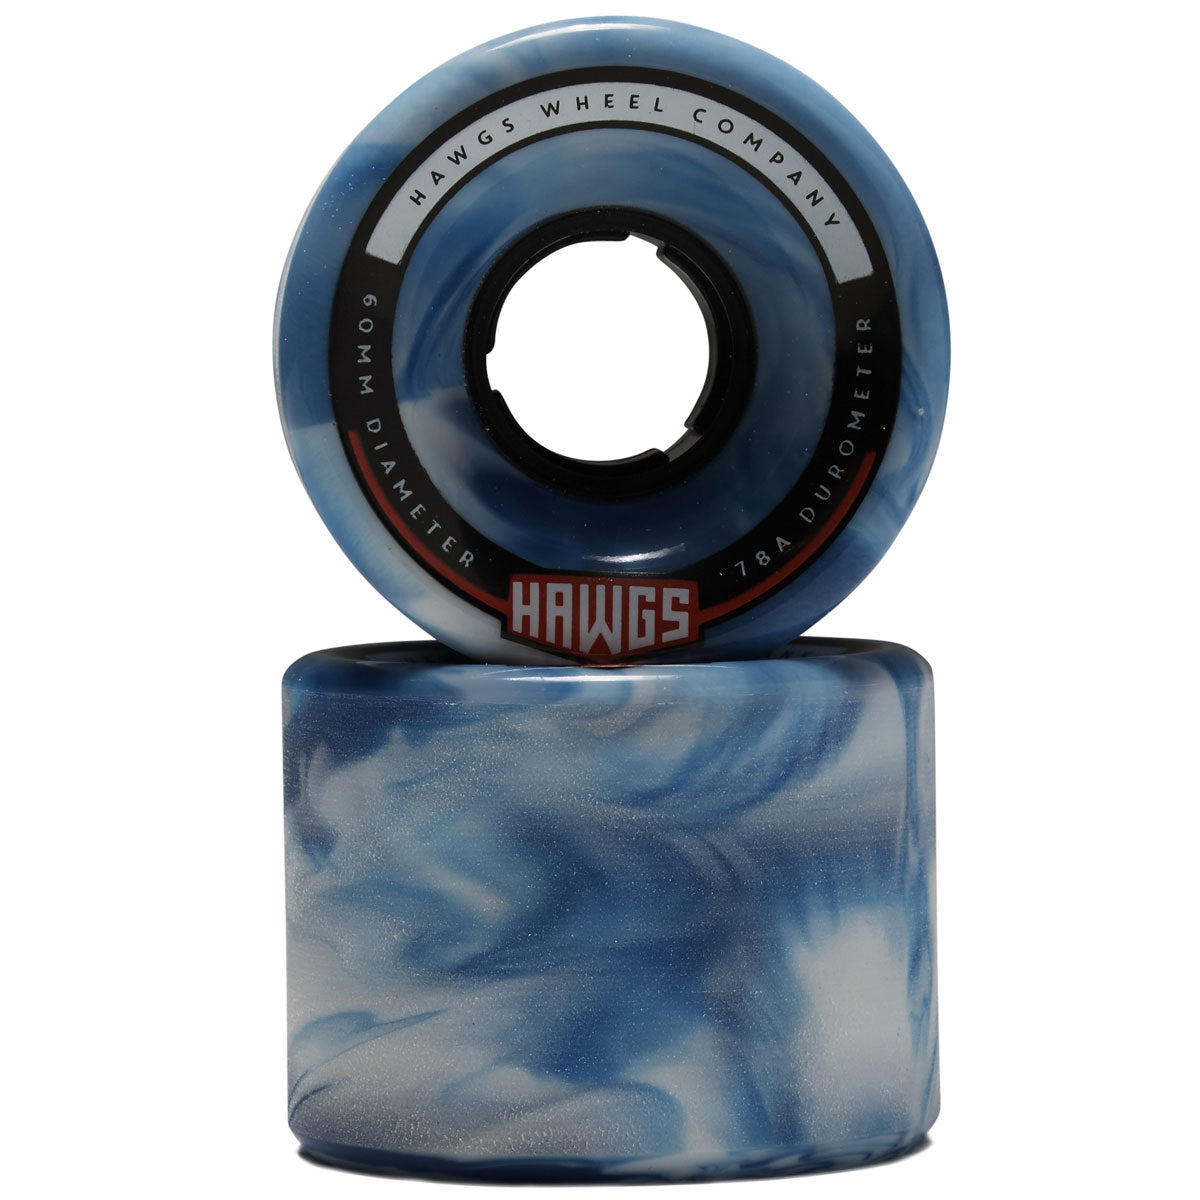 Hawgs Chubby 78a Stone Ground Longboard Wheels - Blue/White - 60mm image 2